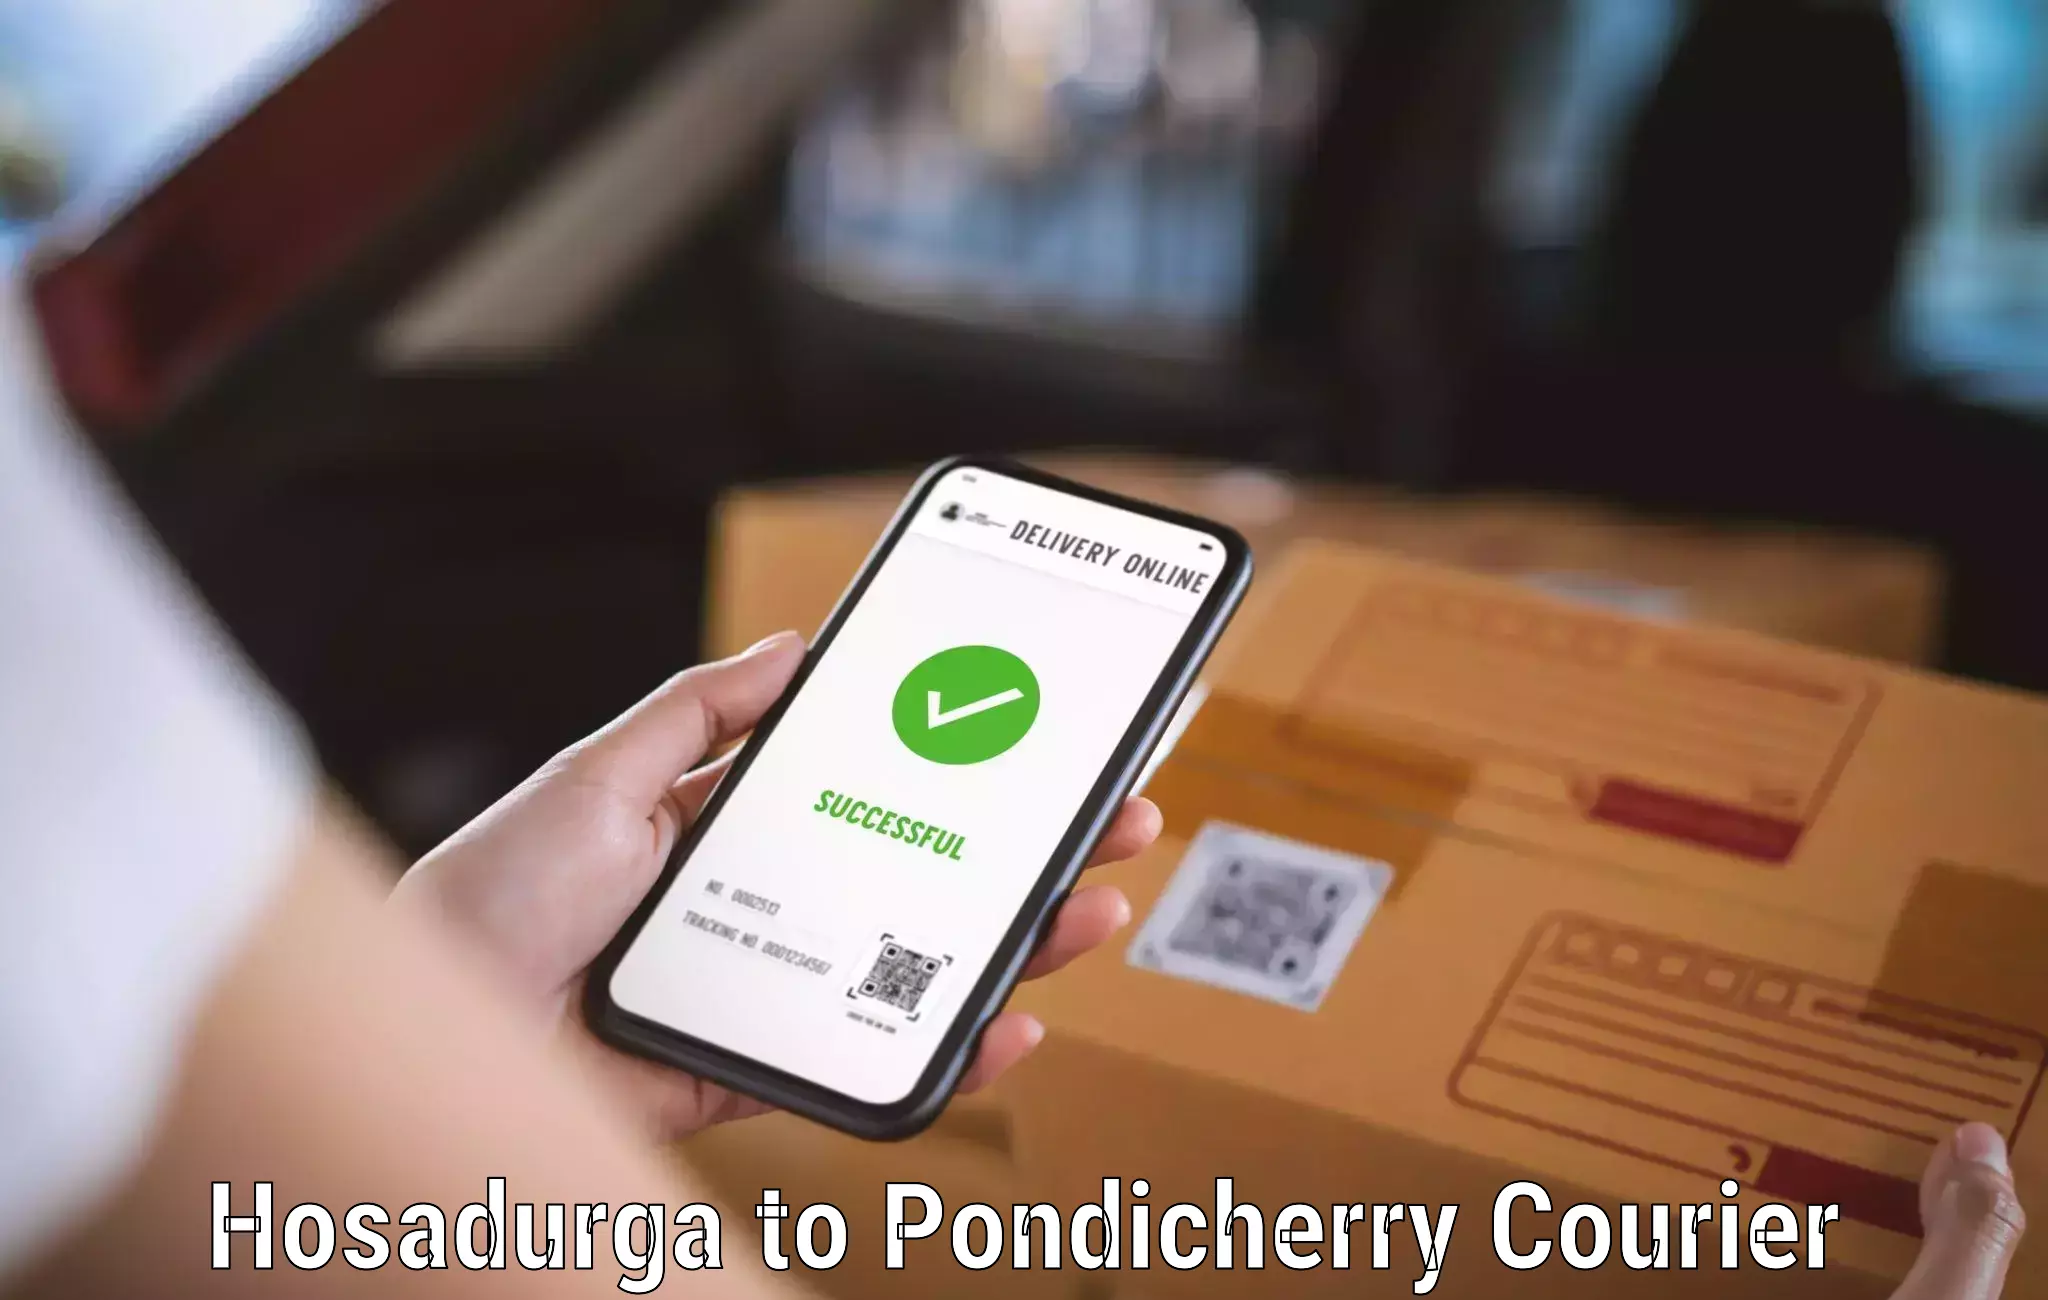 Courier app Hosadurga to Pondicherry University